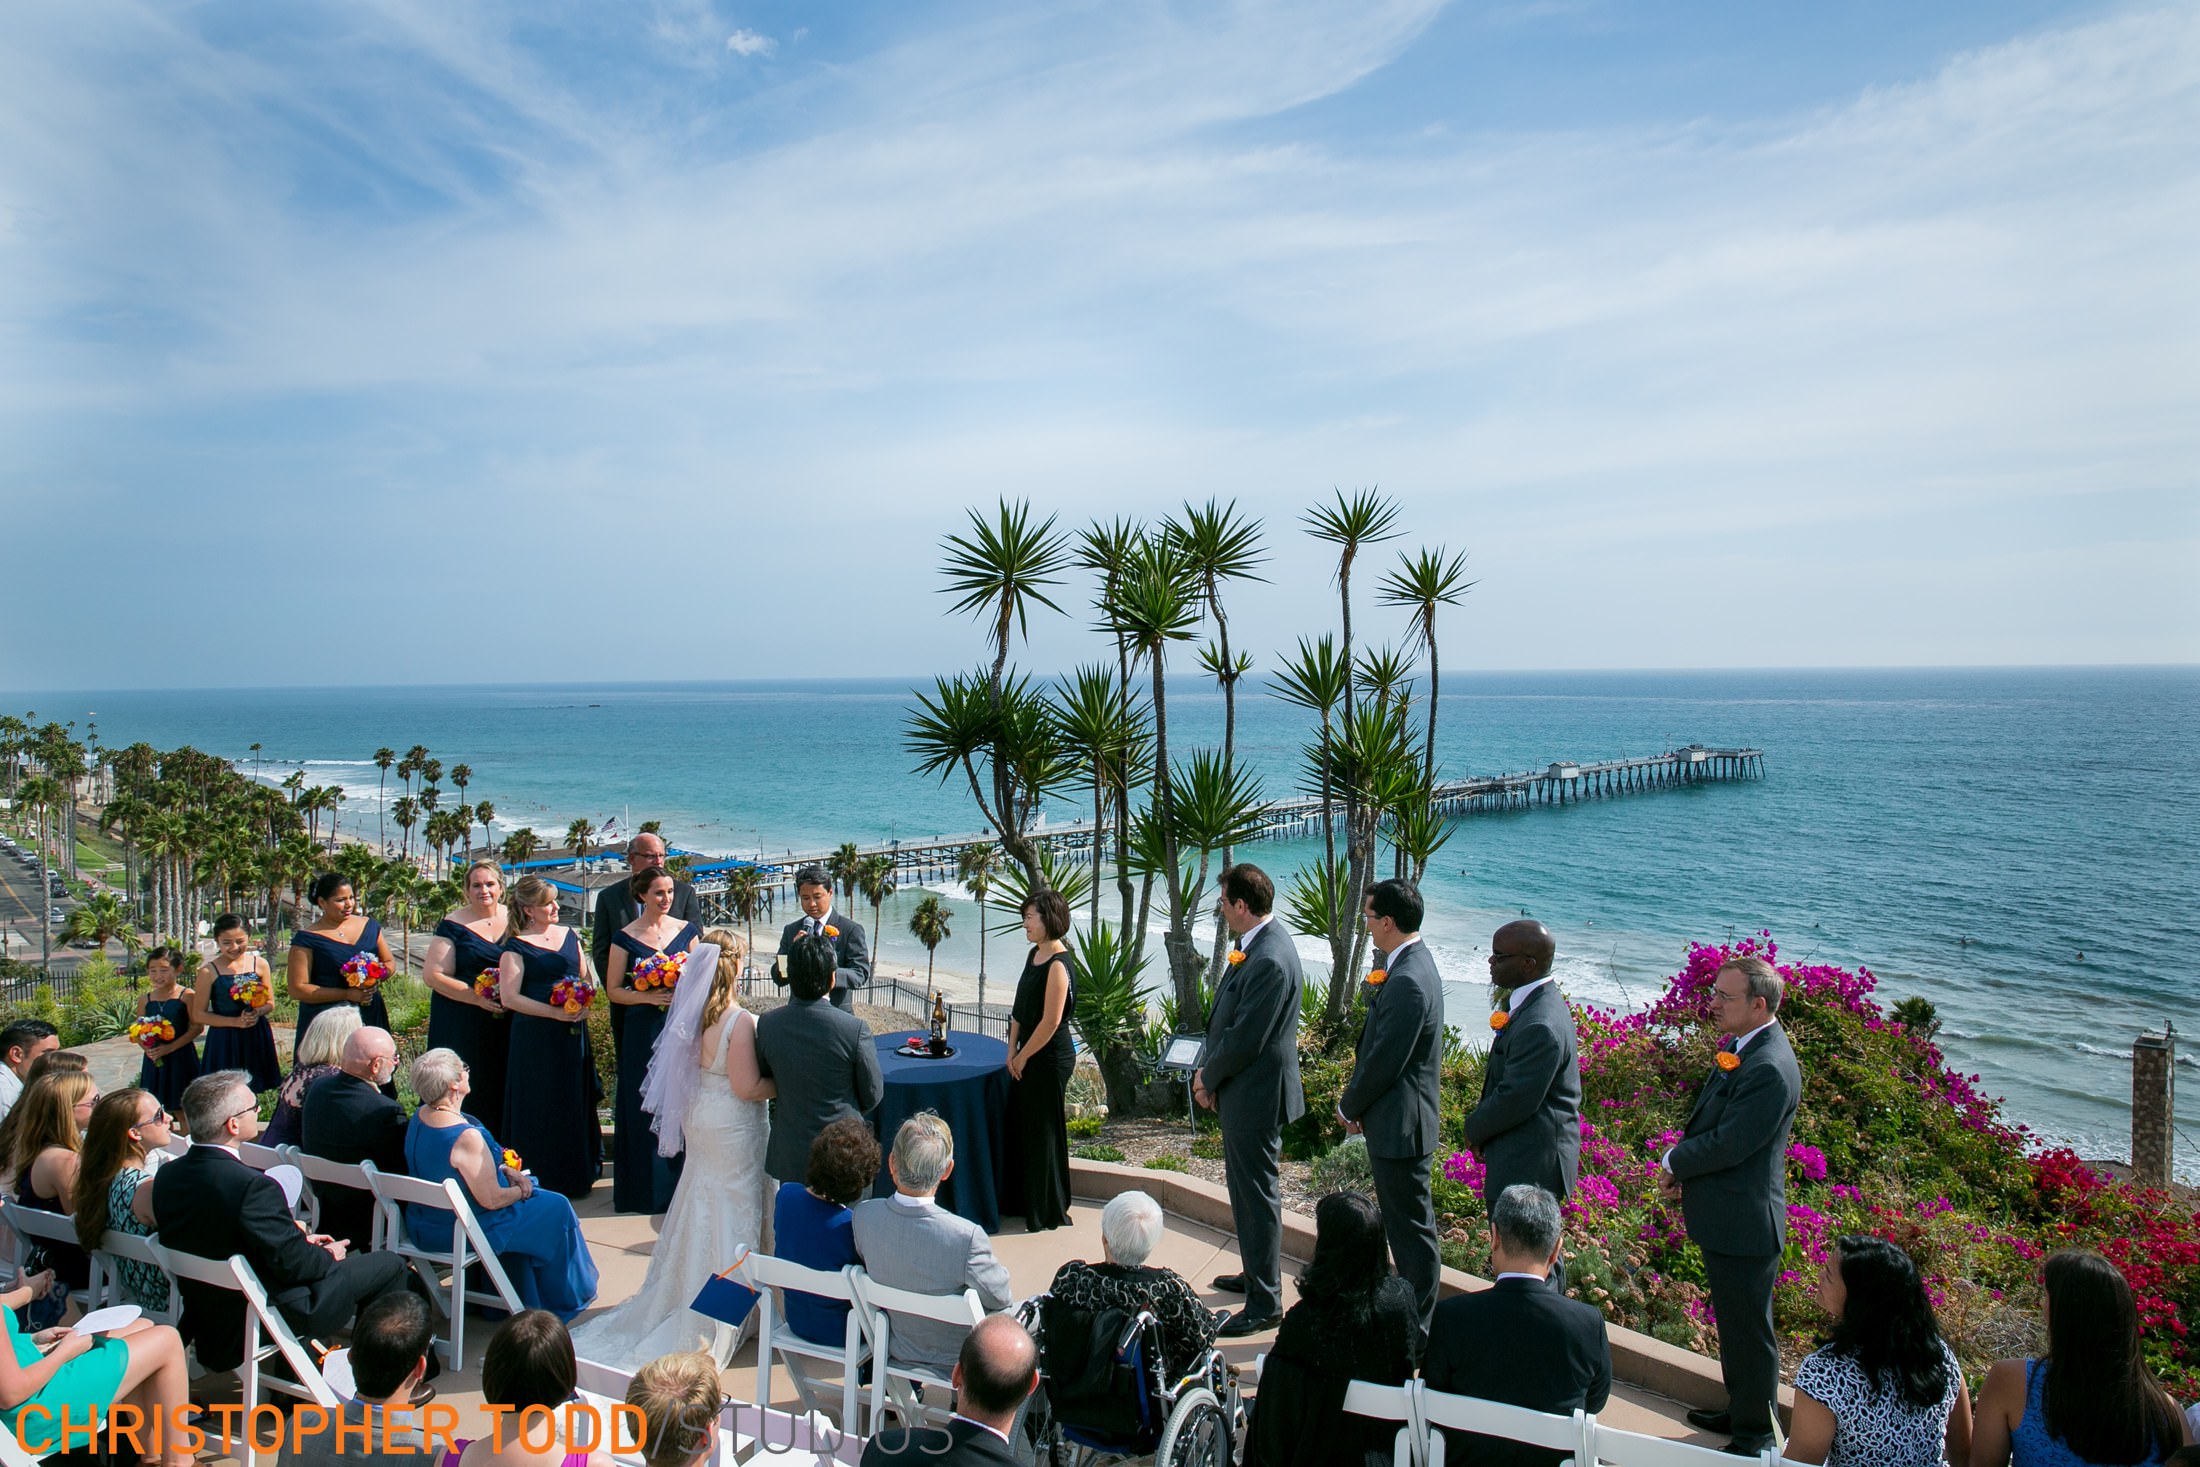 Beautiful outdoor wedding ceremony at Casa Romantica in Orange County overlooking the ocean and San Clemente Pier.